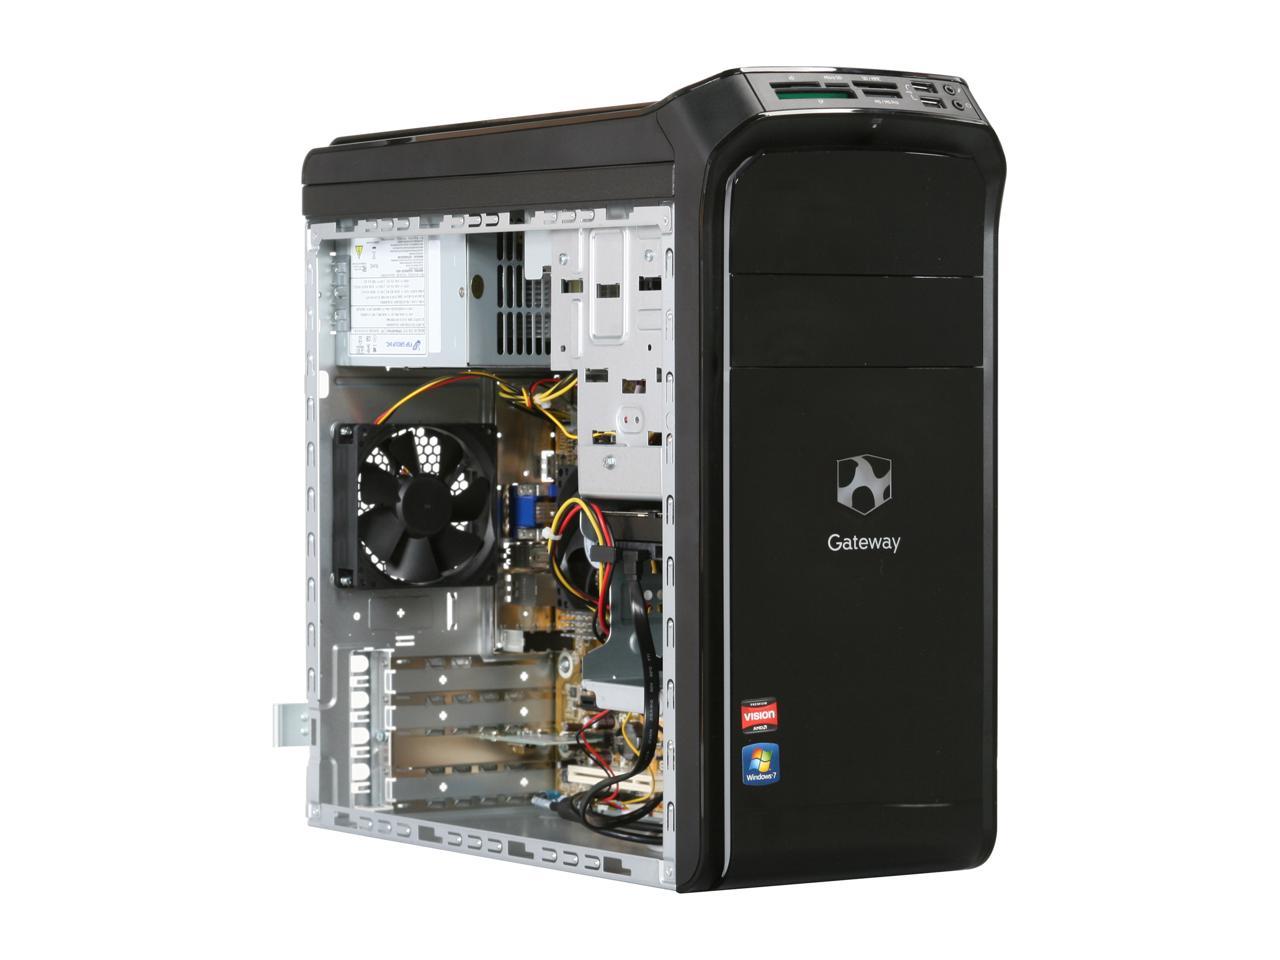 New PC Power Supply Upgrade for Gateway DX4350-UR21P Desktop Computer